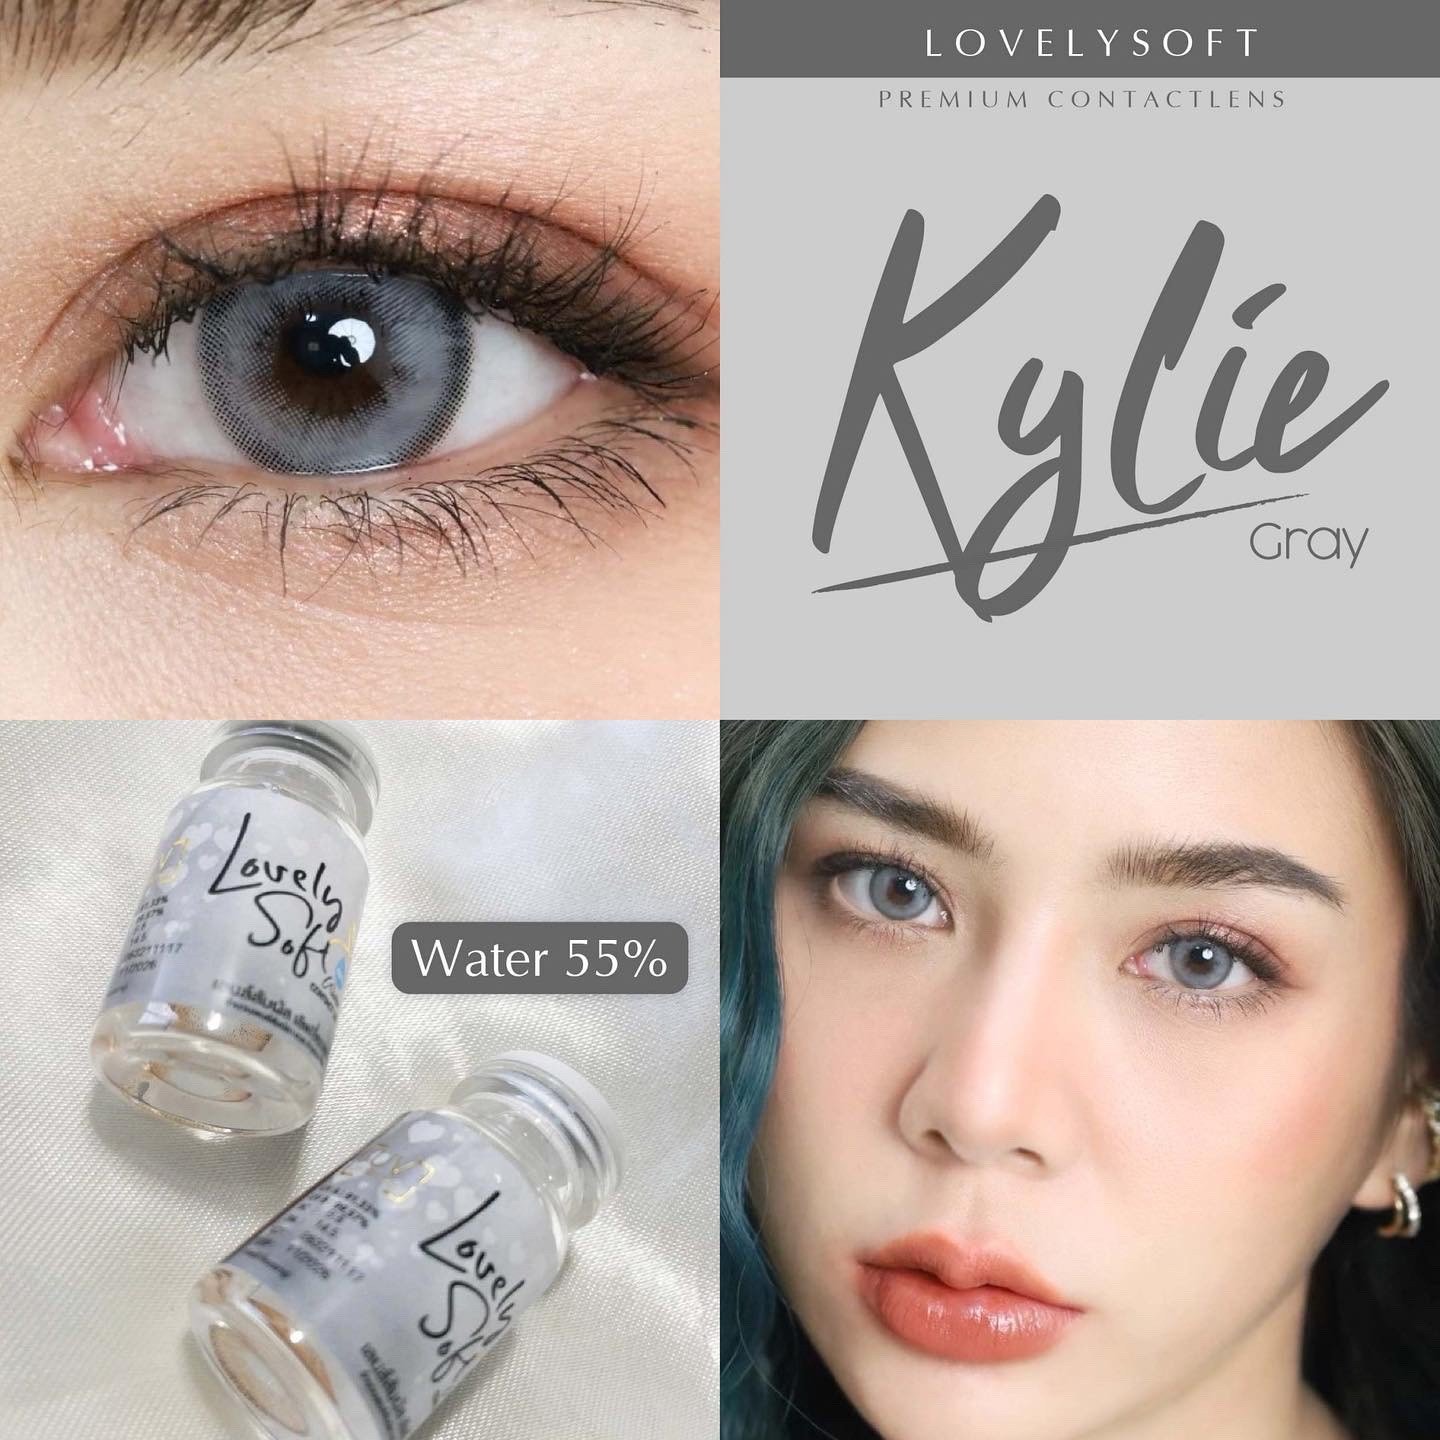 Kylie gray